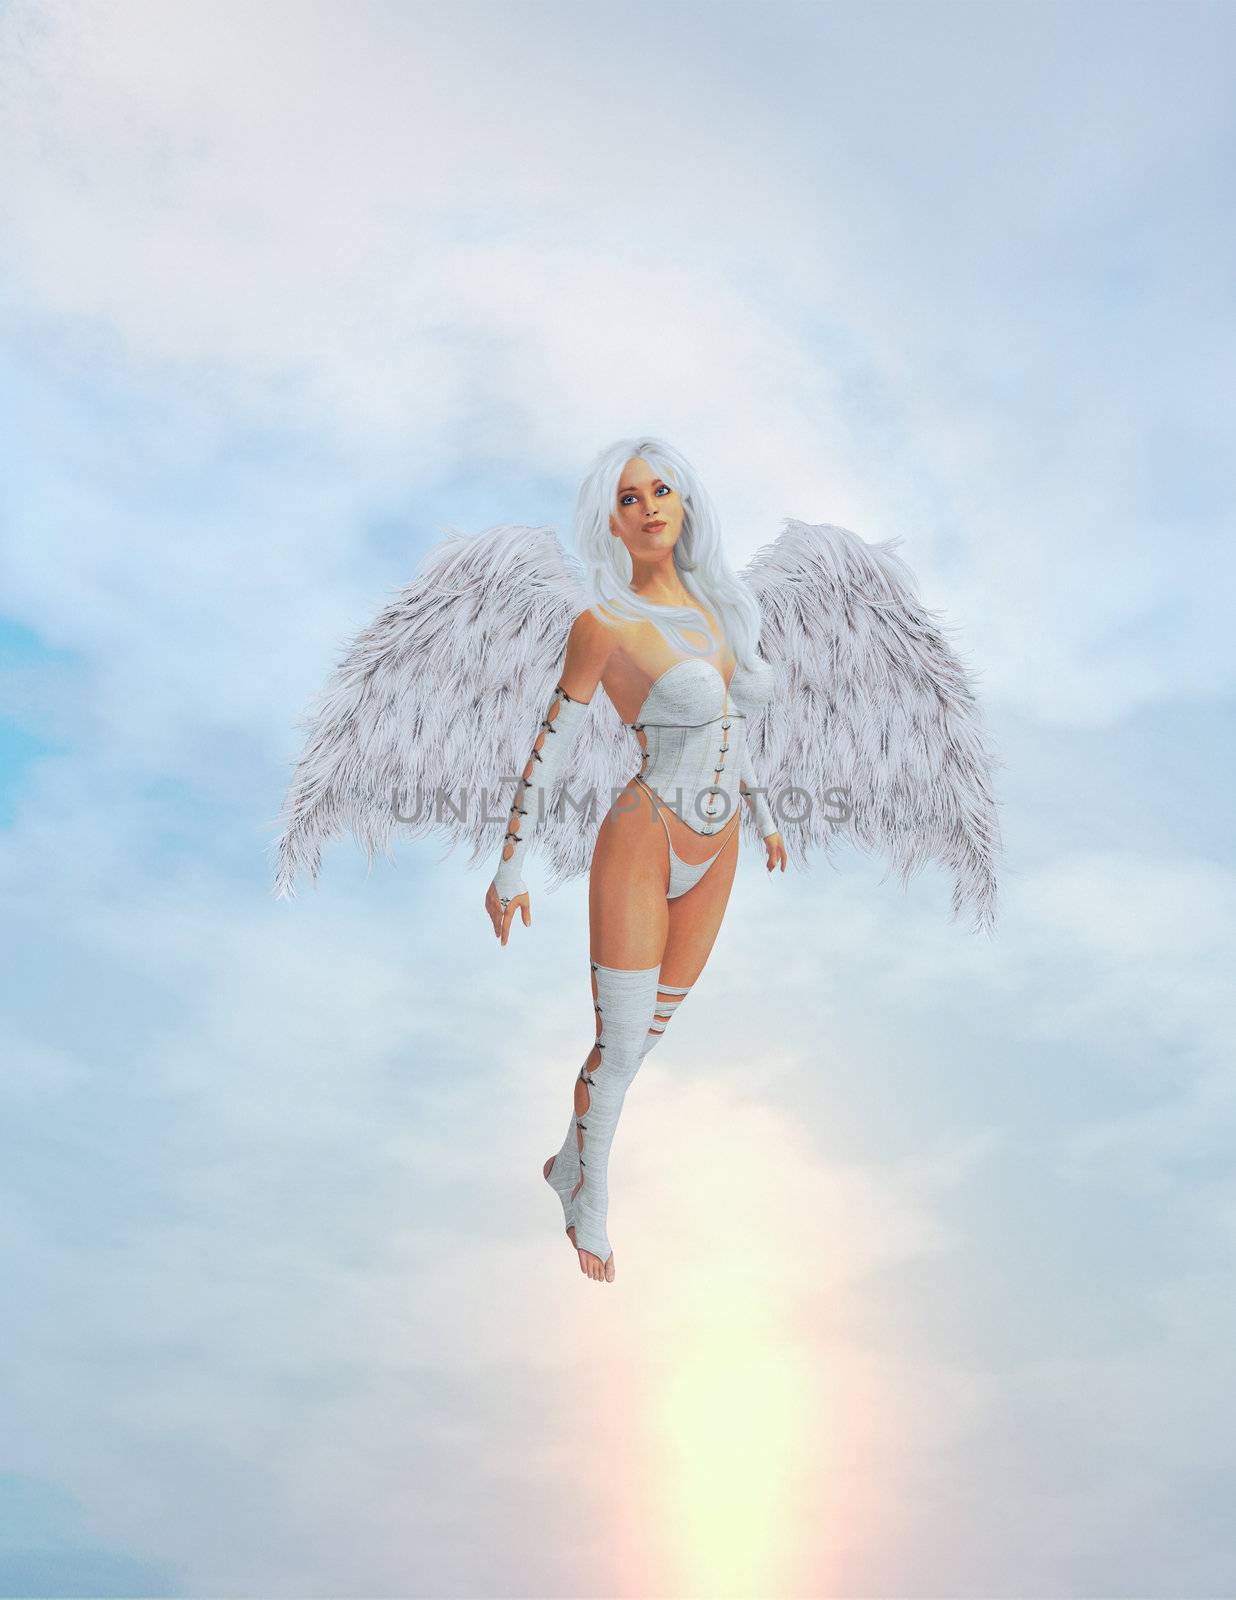 Angel Flying by kathygold